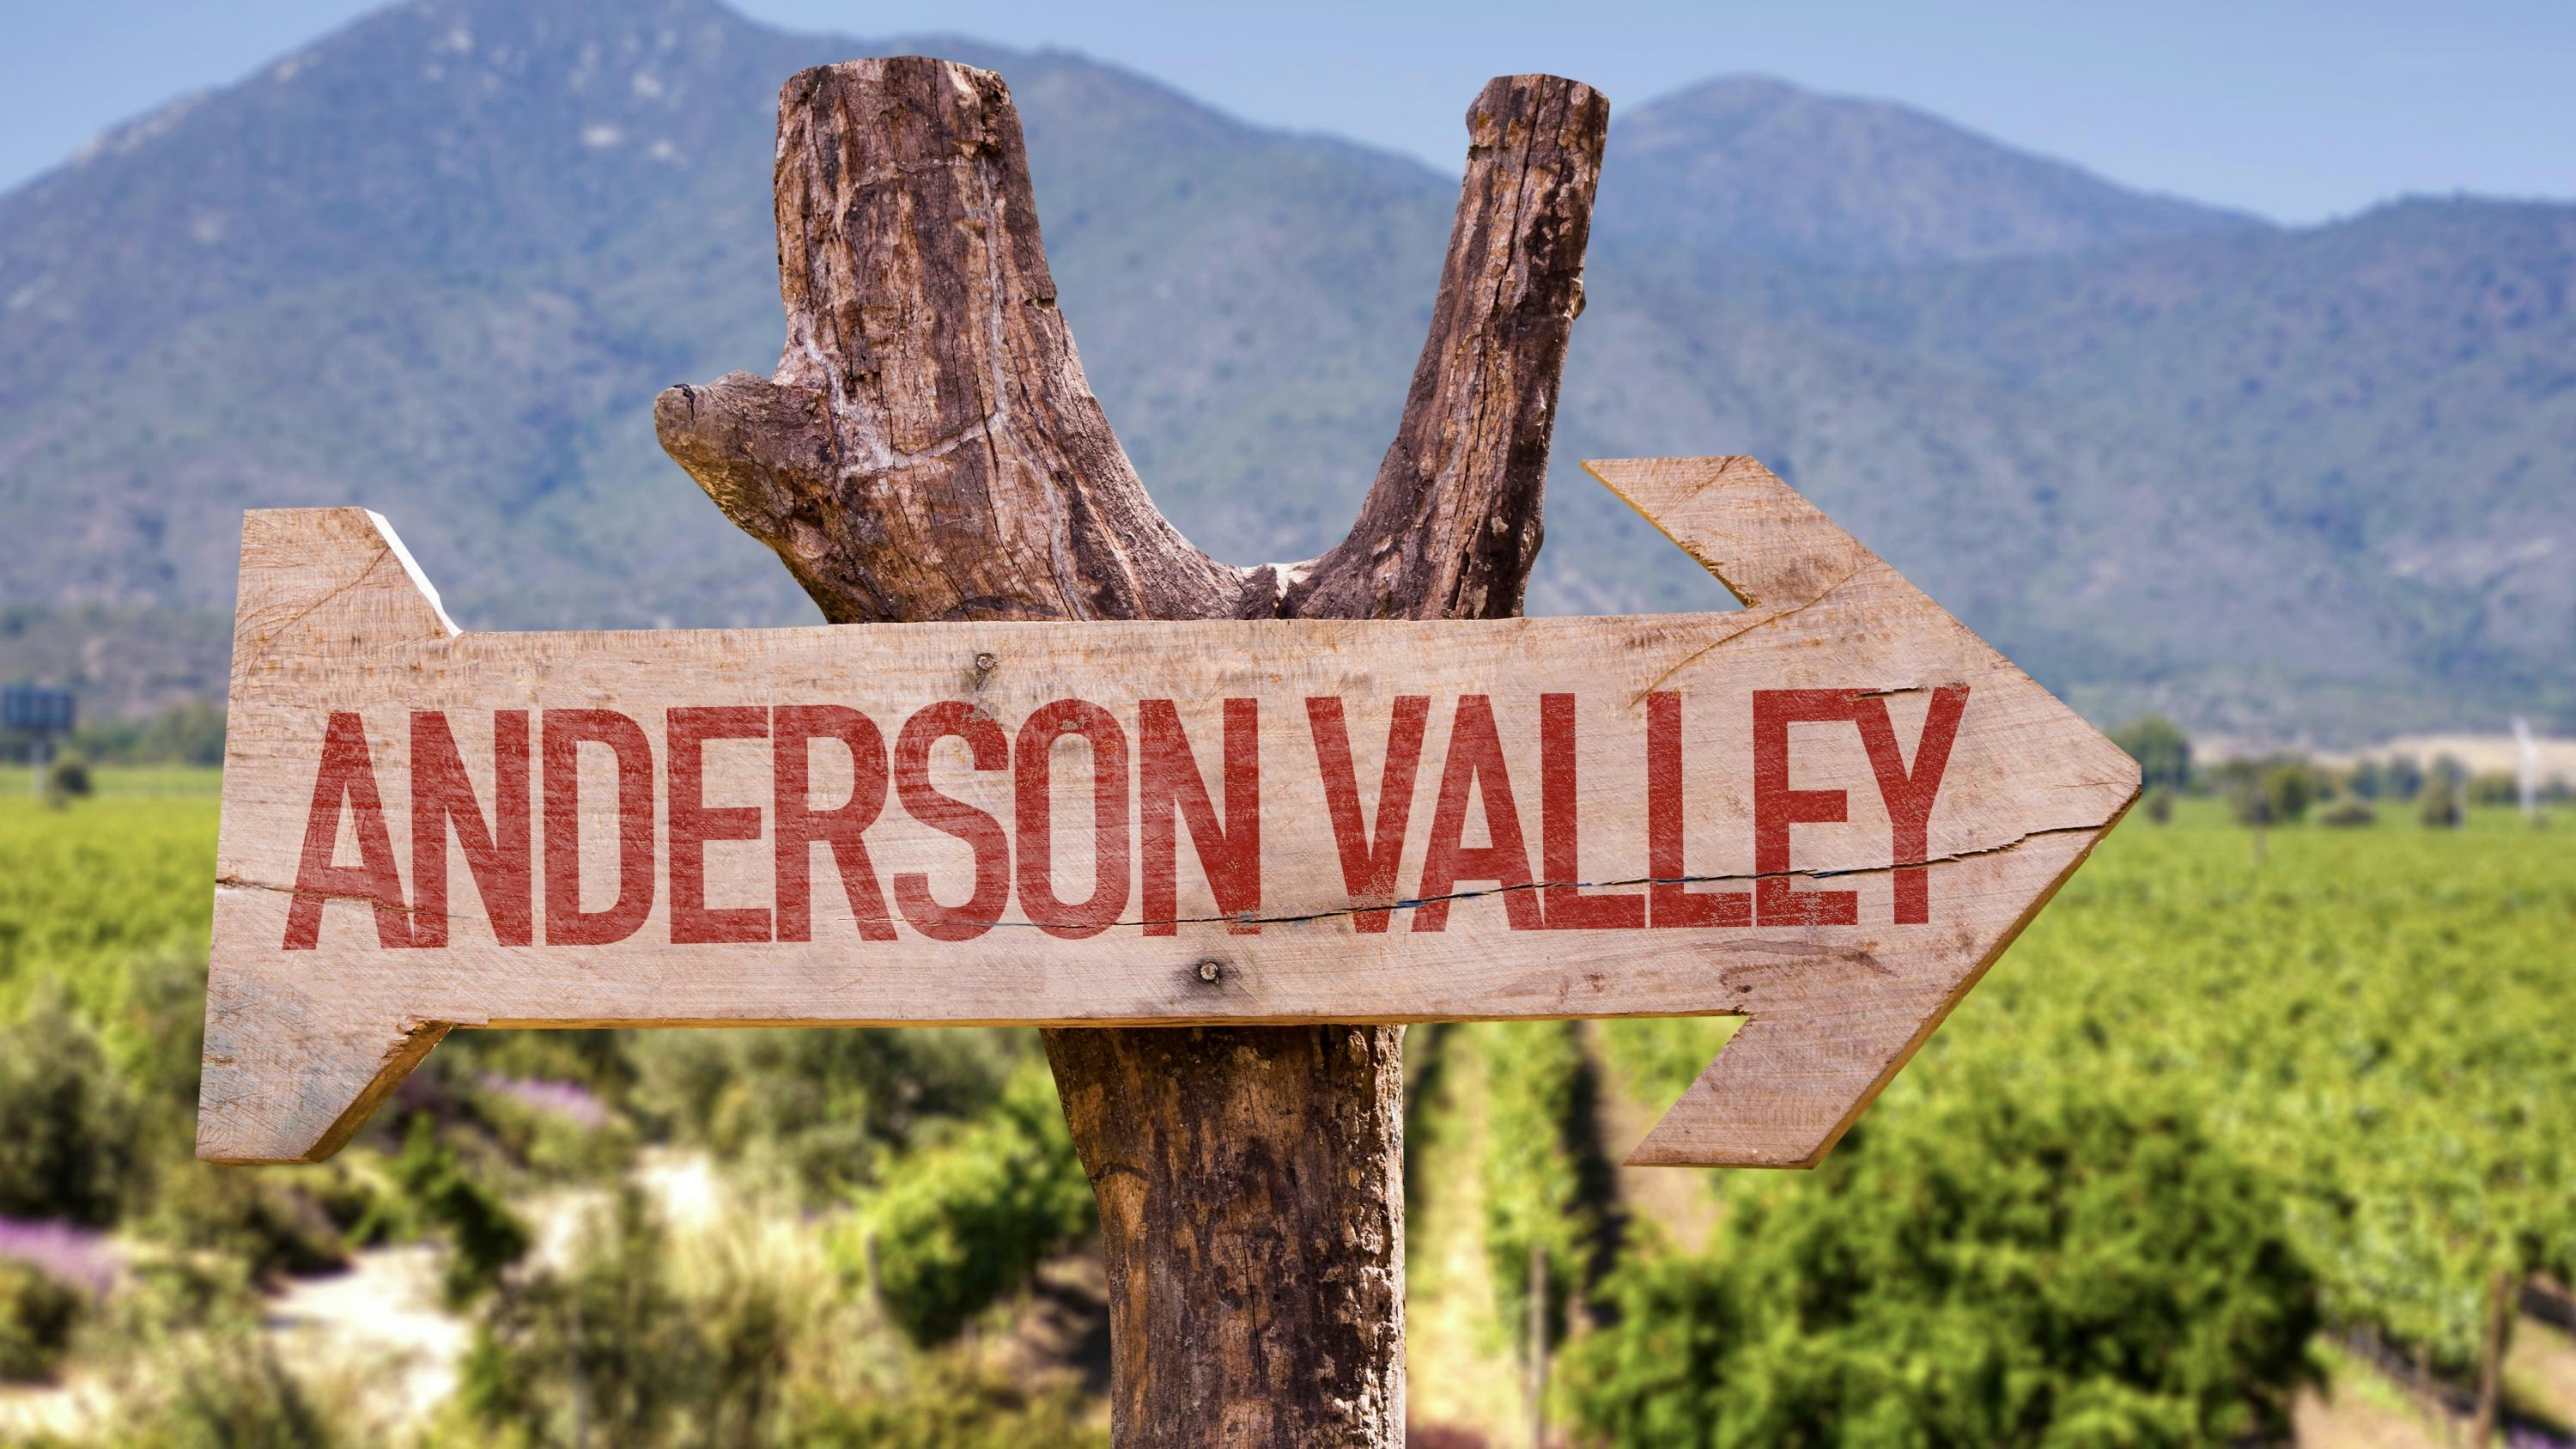 Anderson Valley Sign Highway 28 California Via Magazine Shutterstock 324443255 ?h=8f9cfe54&itok=TtOFxOsc?w=1400&h=700&crop=faces,edges